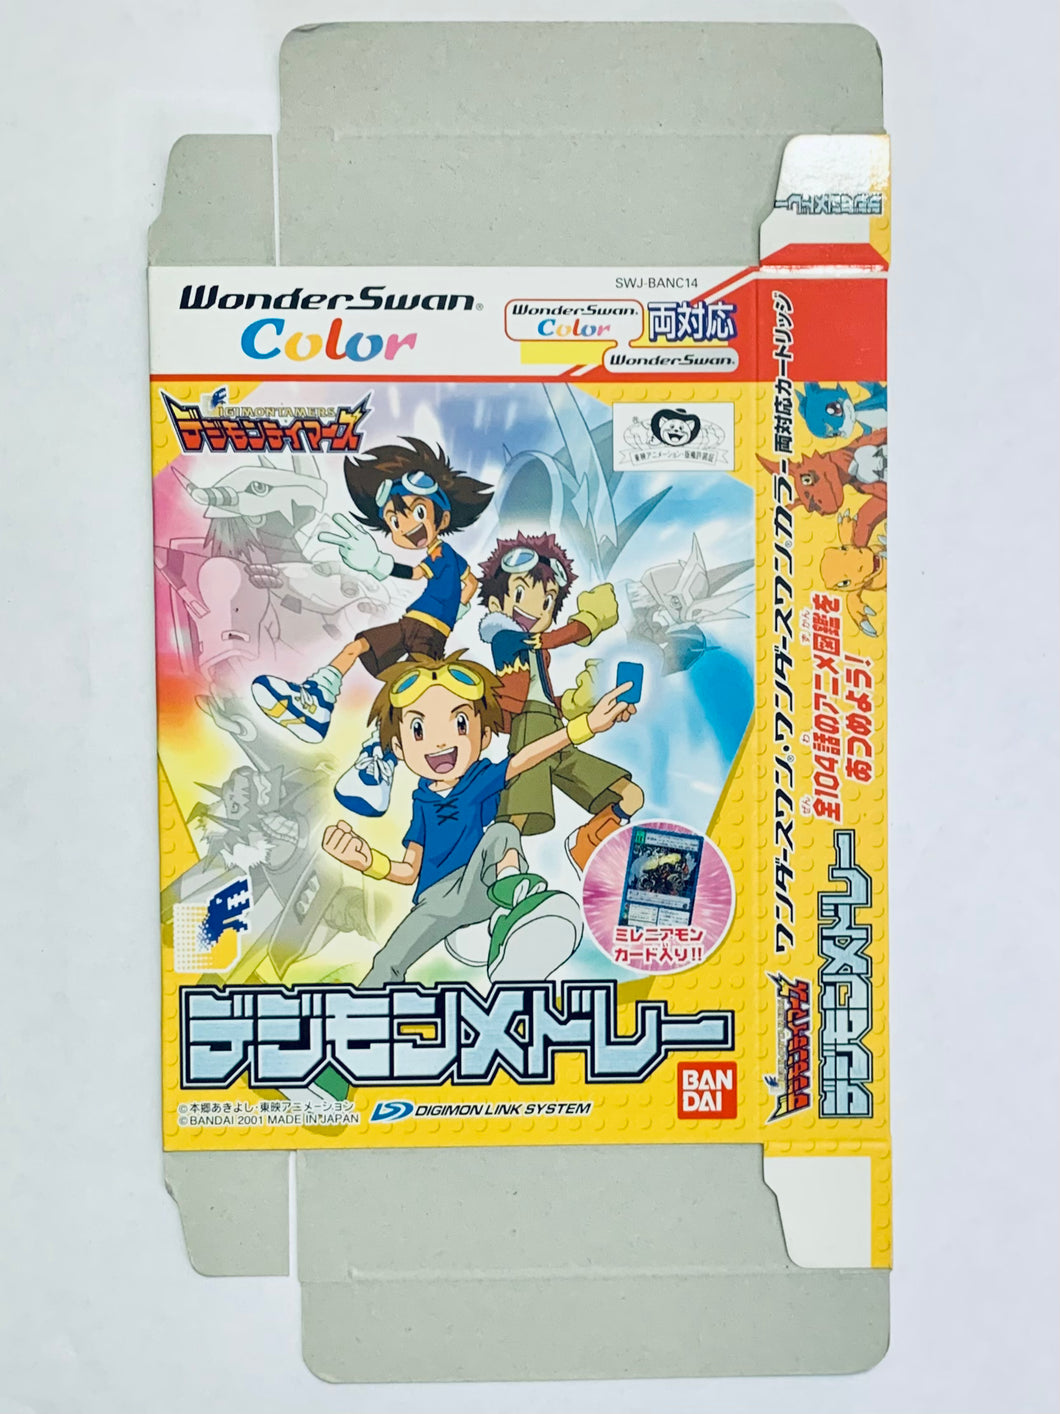 Digimon Tamers: Digimon Medley - WonderSwan Color - WSC - JP - Box Only (SWJ-BANC14)